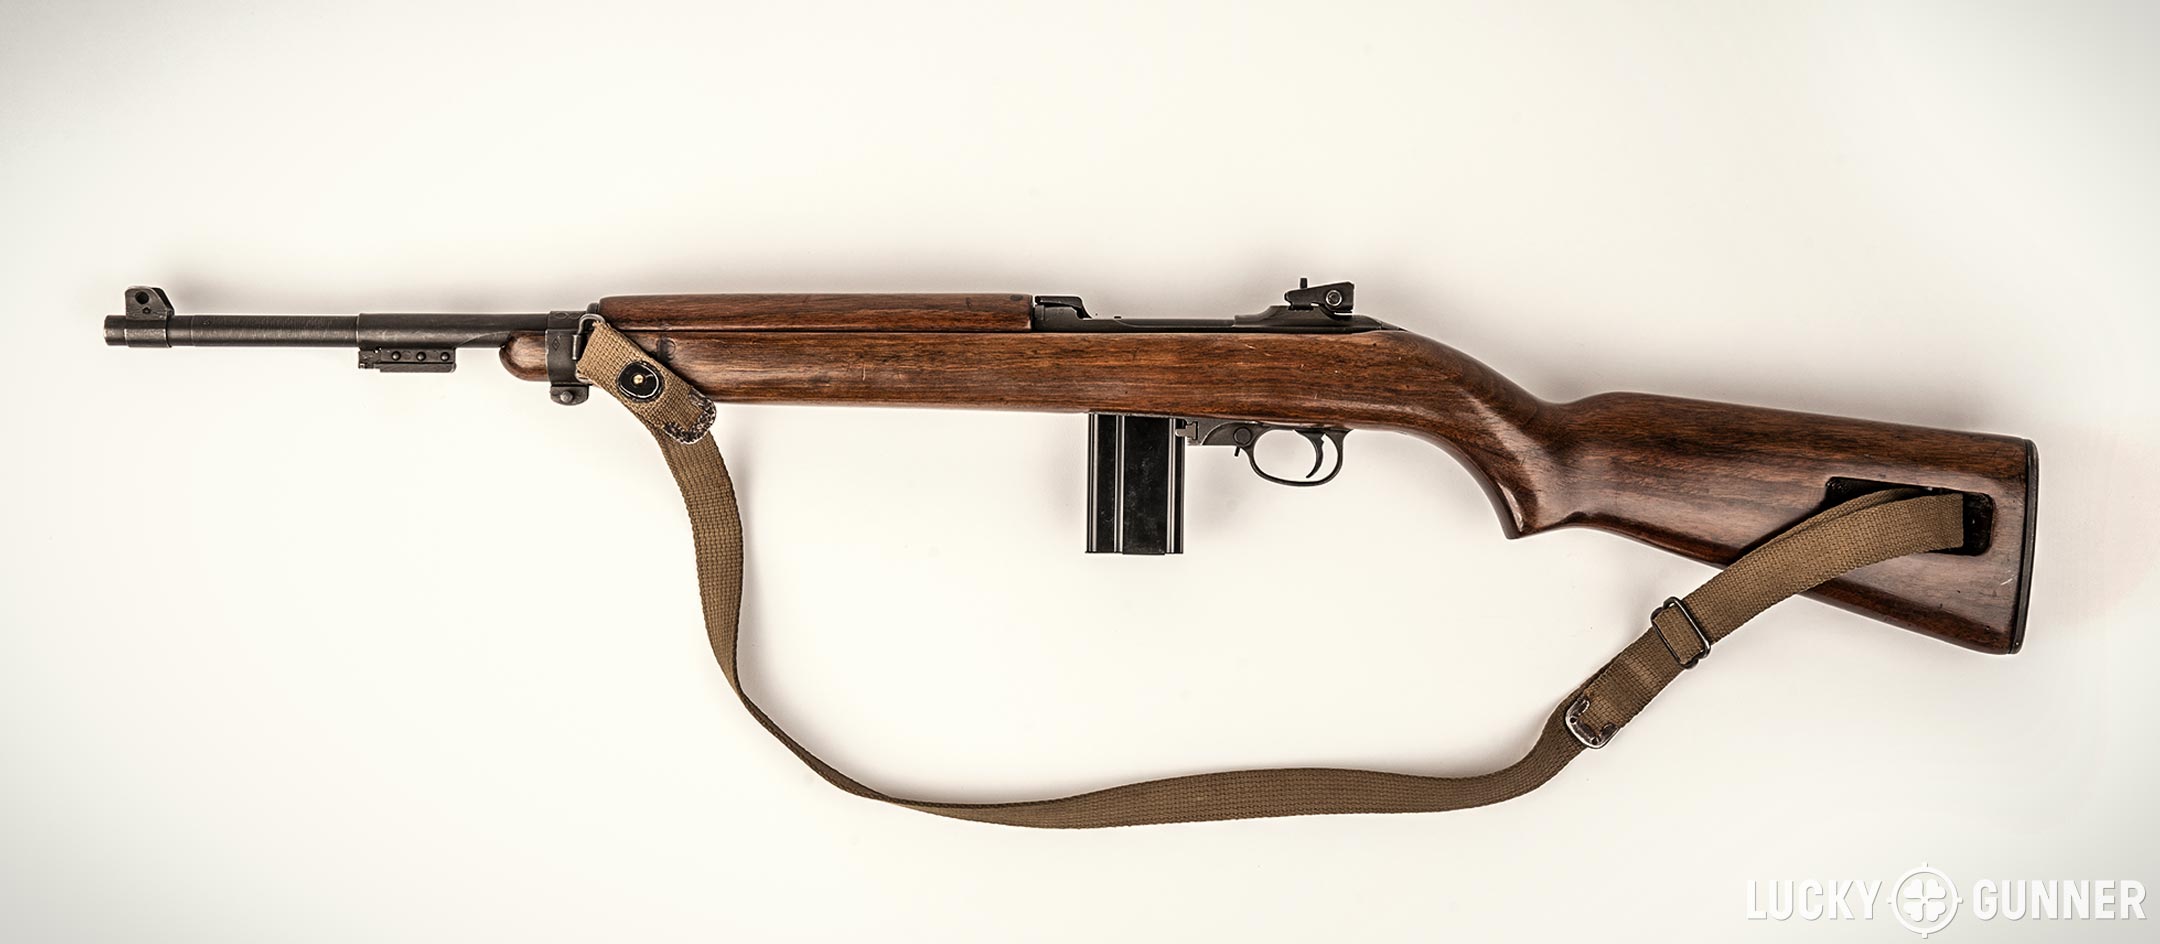 Miniature 1/6th Scale M1 Carbine w/folding stock